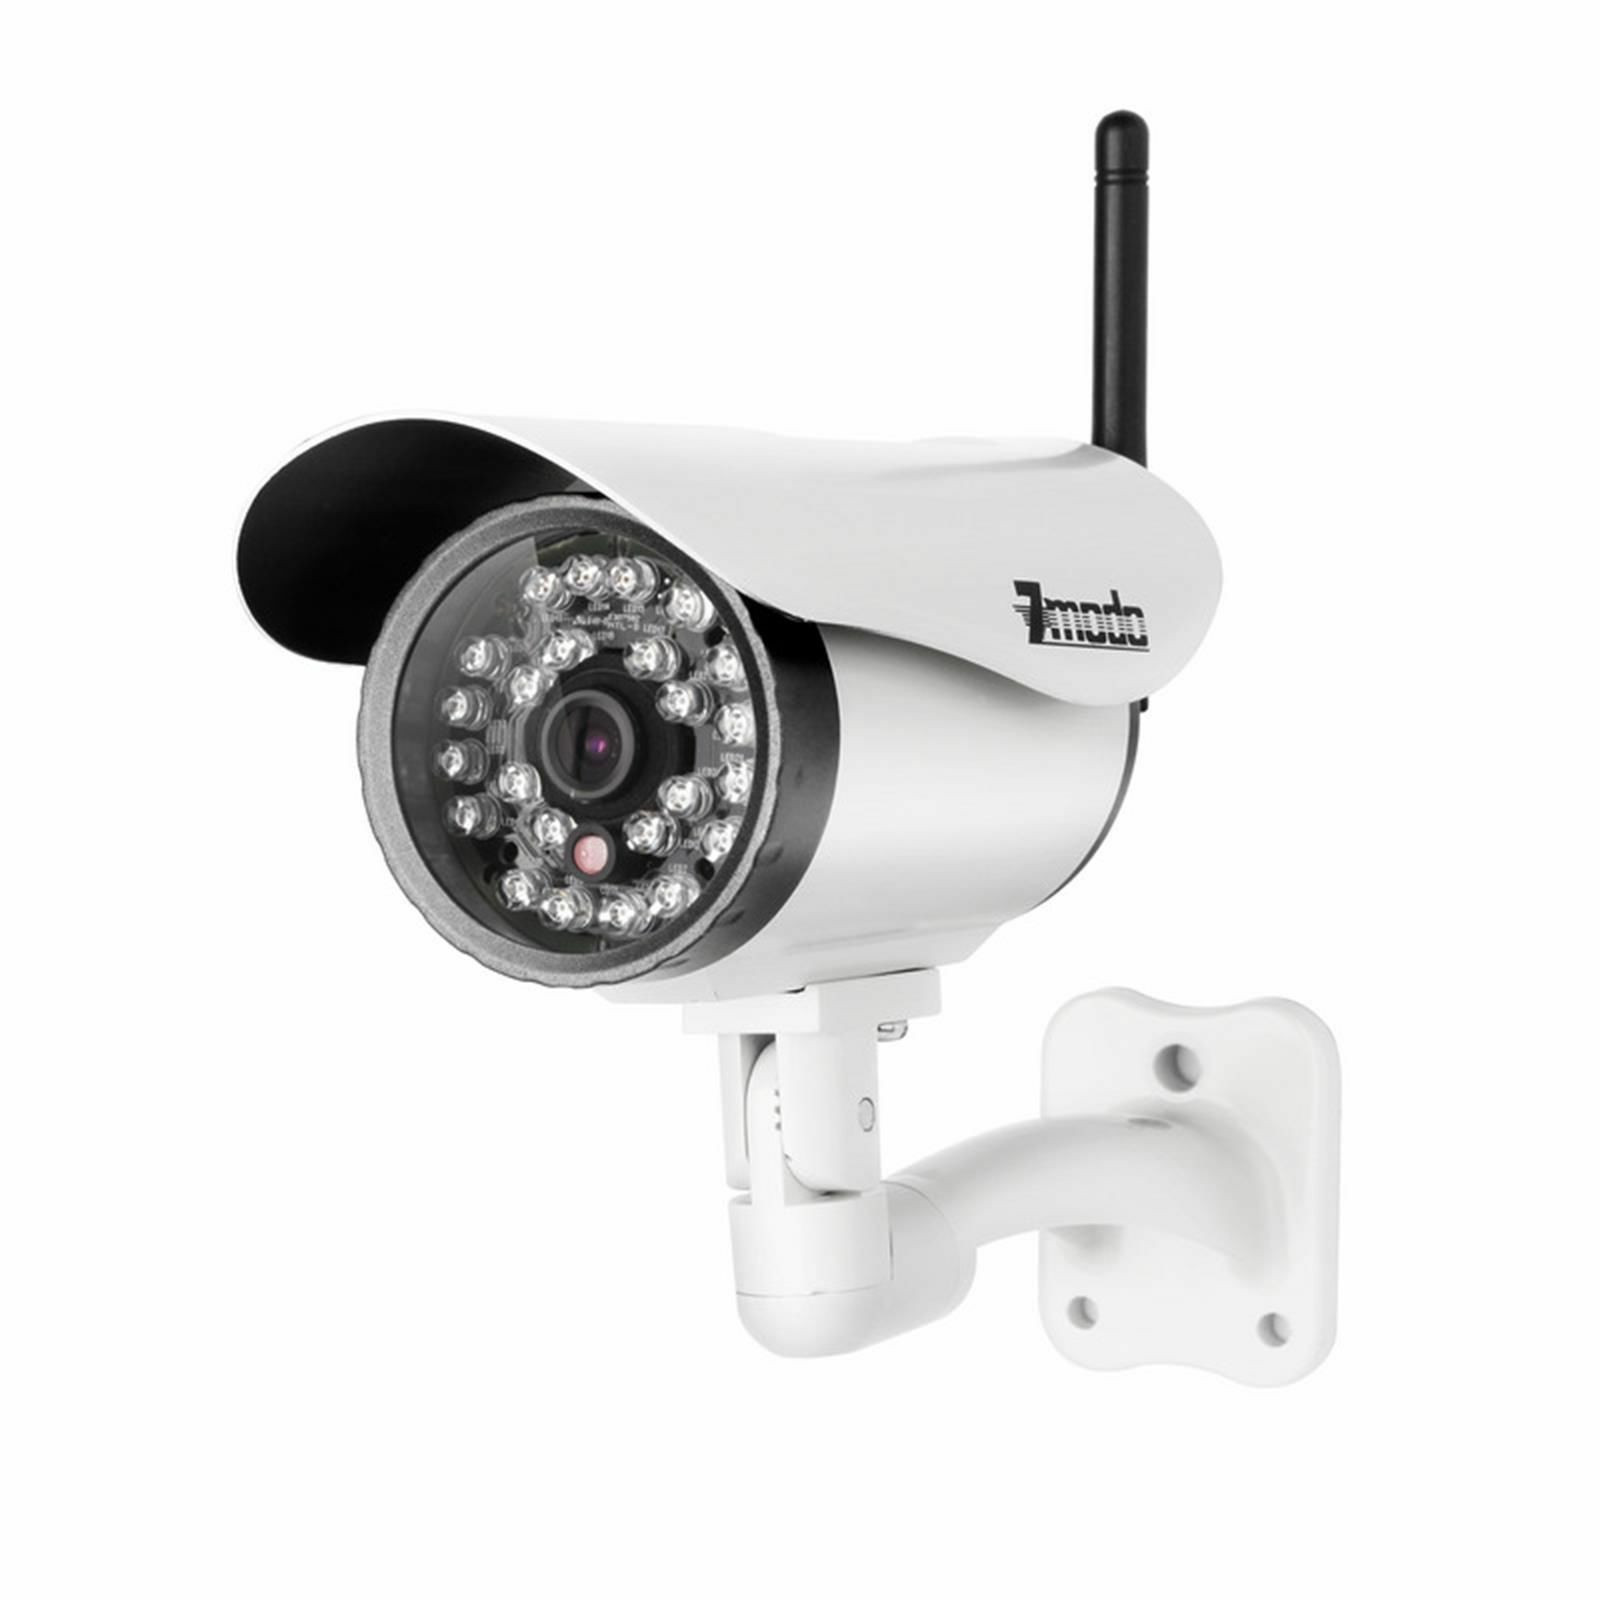 Best ideas about Best Outdoor Wireless Security Camera
. Save or Pin Top 10 Outdoor Wireless Security Cameras Now.